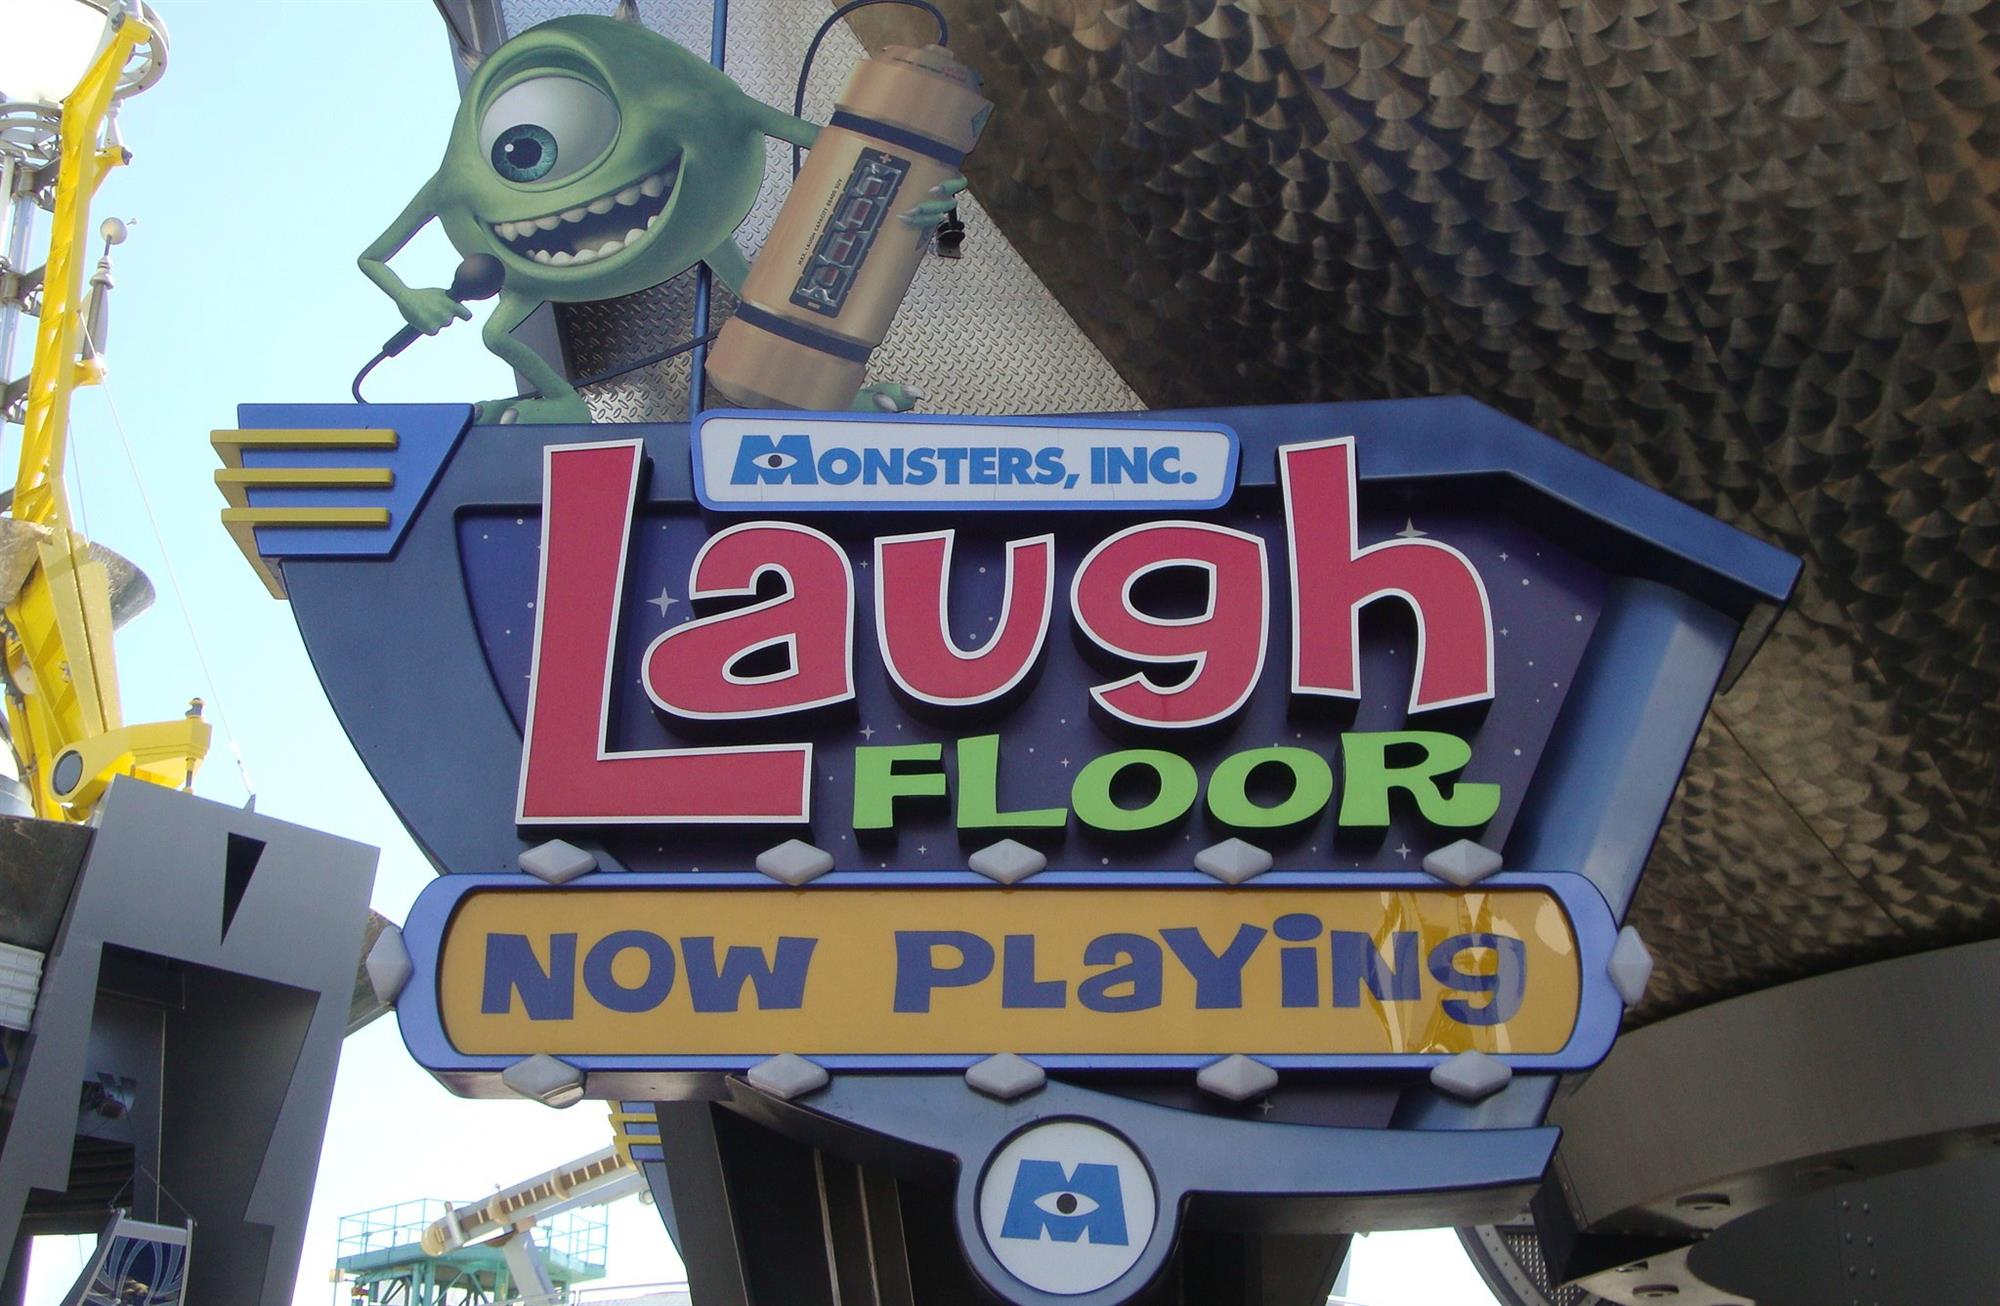 Monsters, Inc Laugh Floor